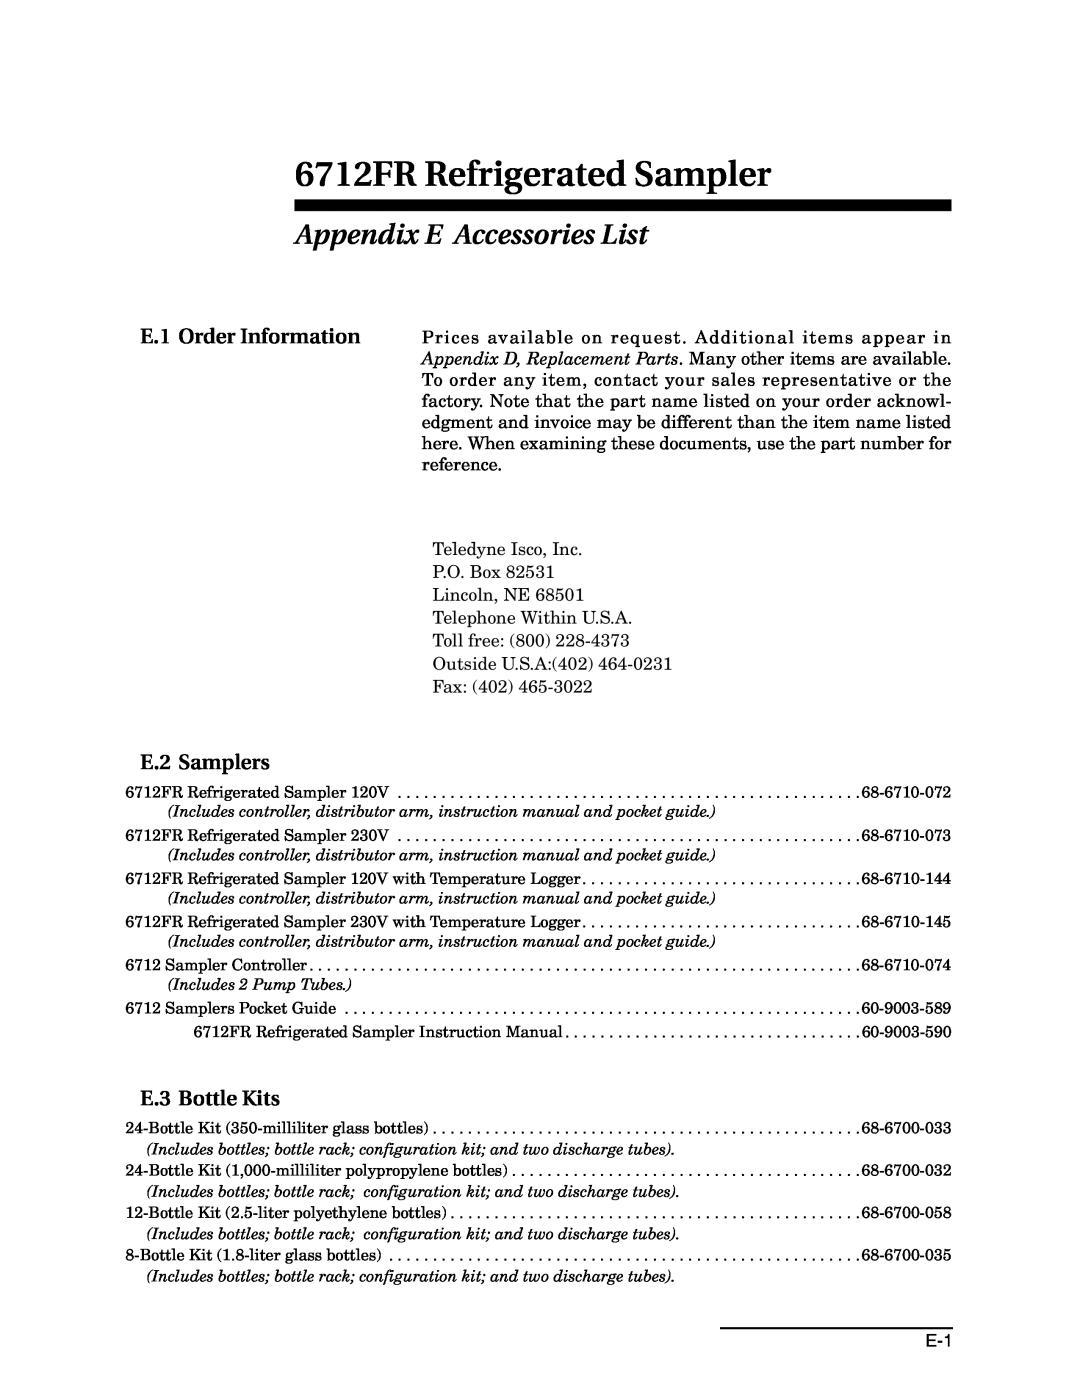 Teledyne 6712FR manual Appendix E Accessories List, E.1 Order Information E.2 Samplers, E.3 Bottle Kits 